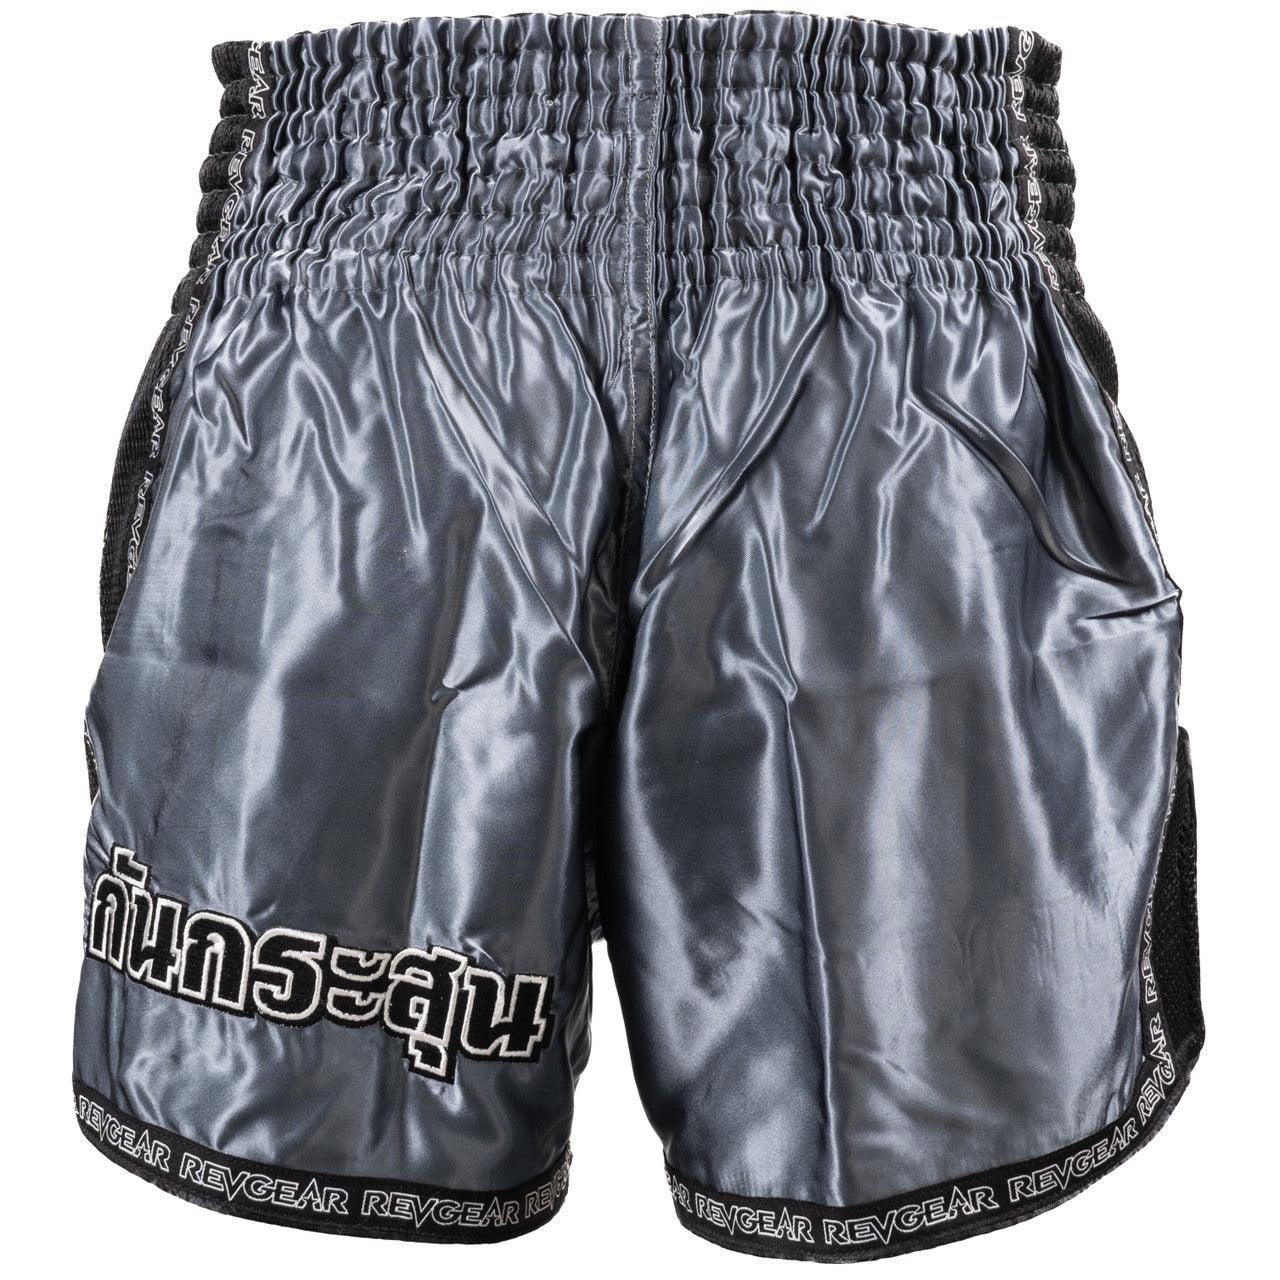 Legends Thai Shorts - Spirit - Gray / Black - Violent Art Shop